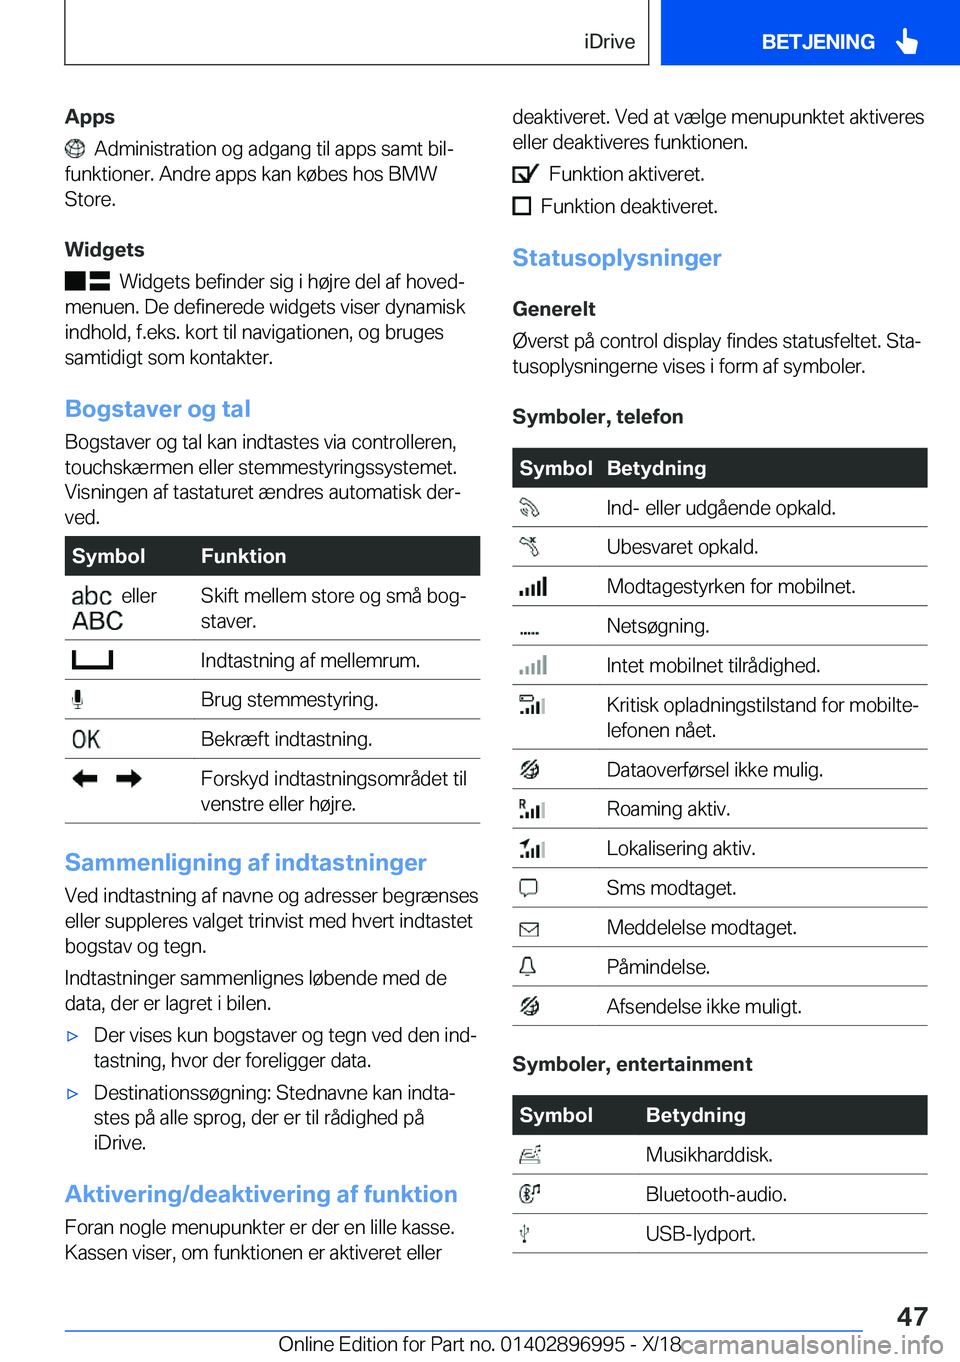 BMW Z4 2019  InstruktionsbØger (in Danish) �A�p�p�s
���A�d�m�i�n�i�s�t�r�a�t�i�o�n��o�g��a�d�g�a�n�g��t�i�l��a�p�p�s��s�a�m�t��b�i�lj
�f�u�n�k�t�i�o�n�e�r�.��A�n�d�r�e��a�p�p�s��k�a�n��k�